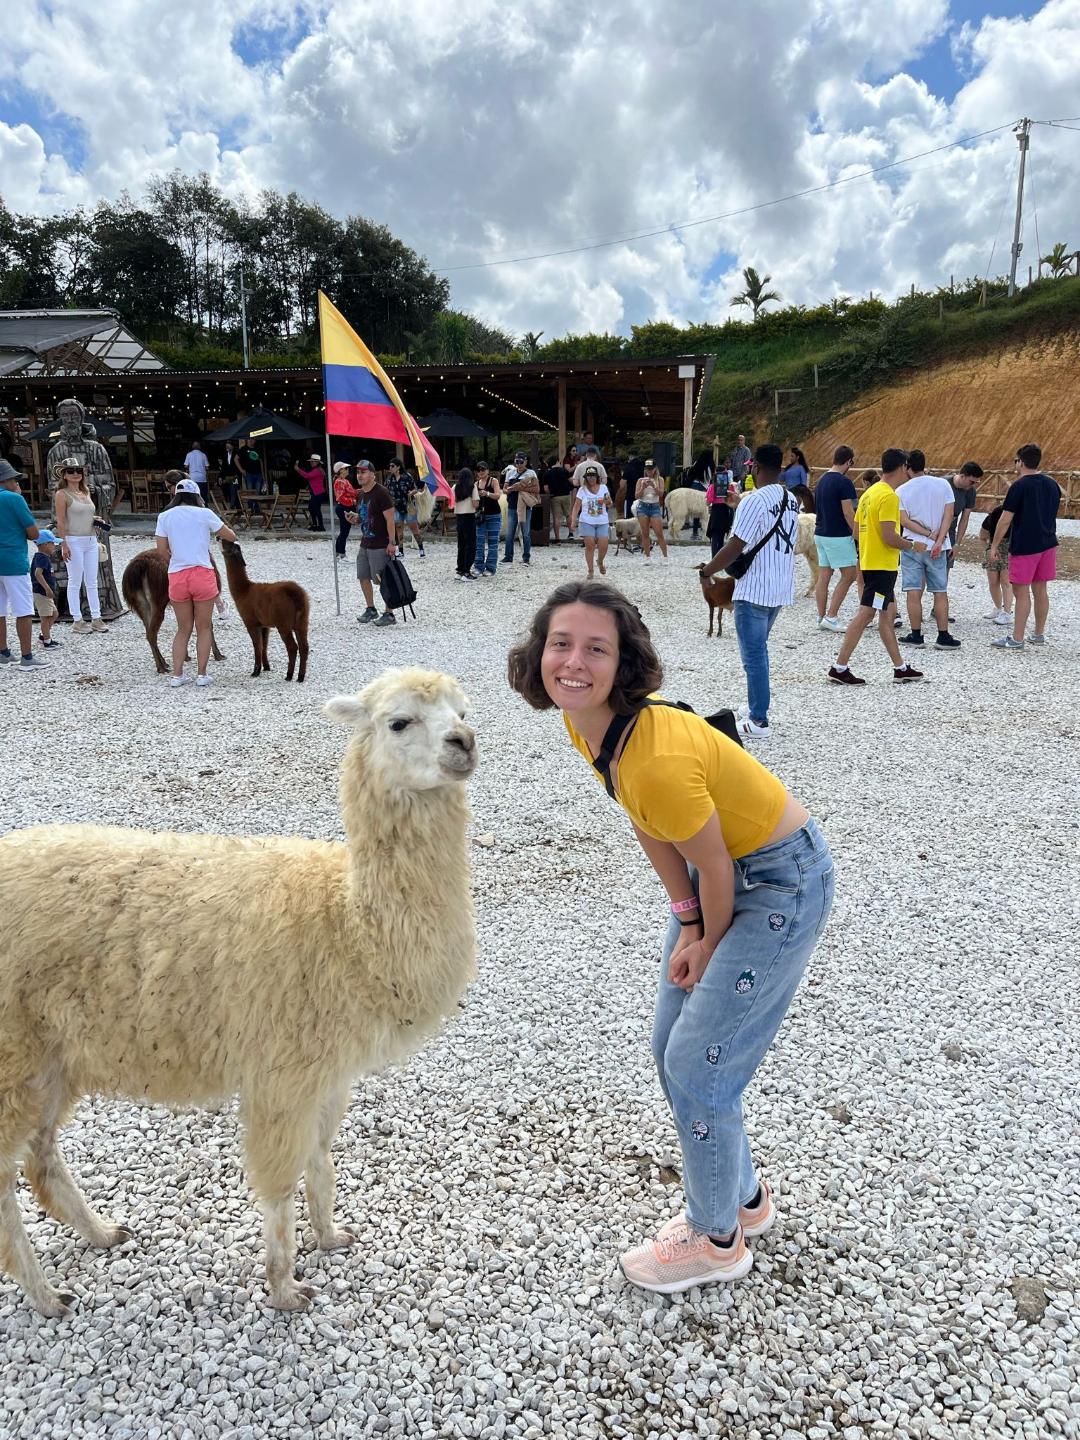 Dievča pózuje s lamou. Za nimi sú turisti a kolumbijská vlajka.